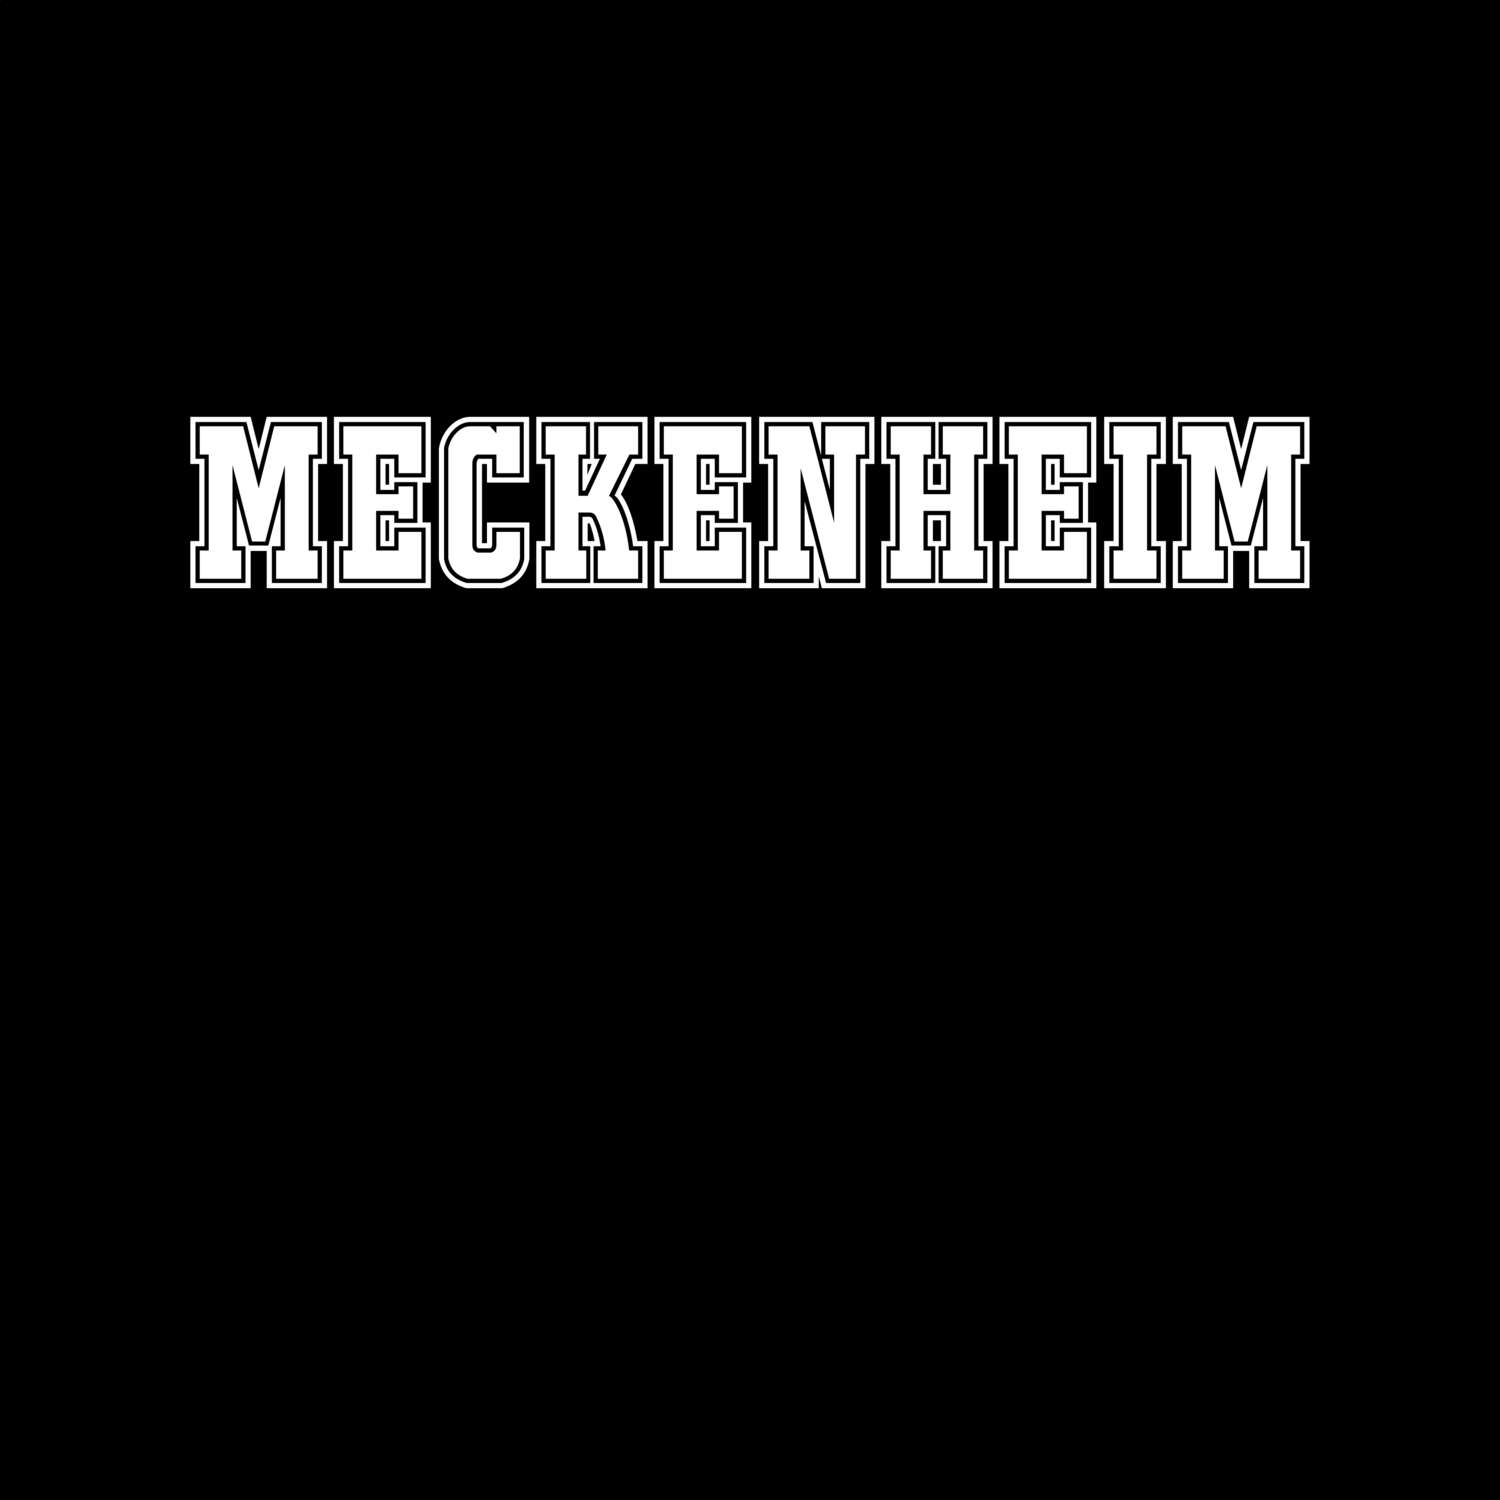 Meckenheim T-Shirt »Classic«